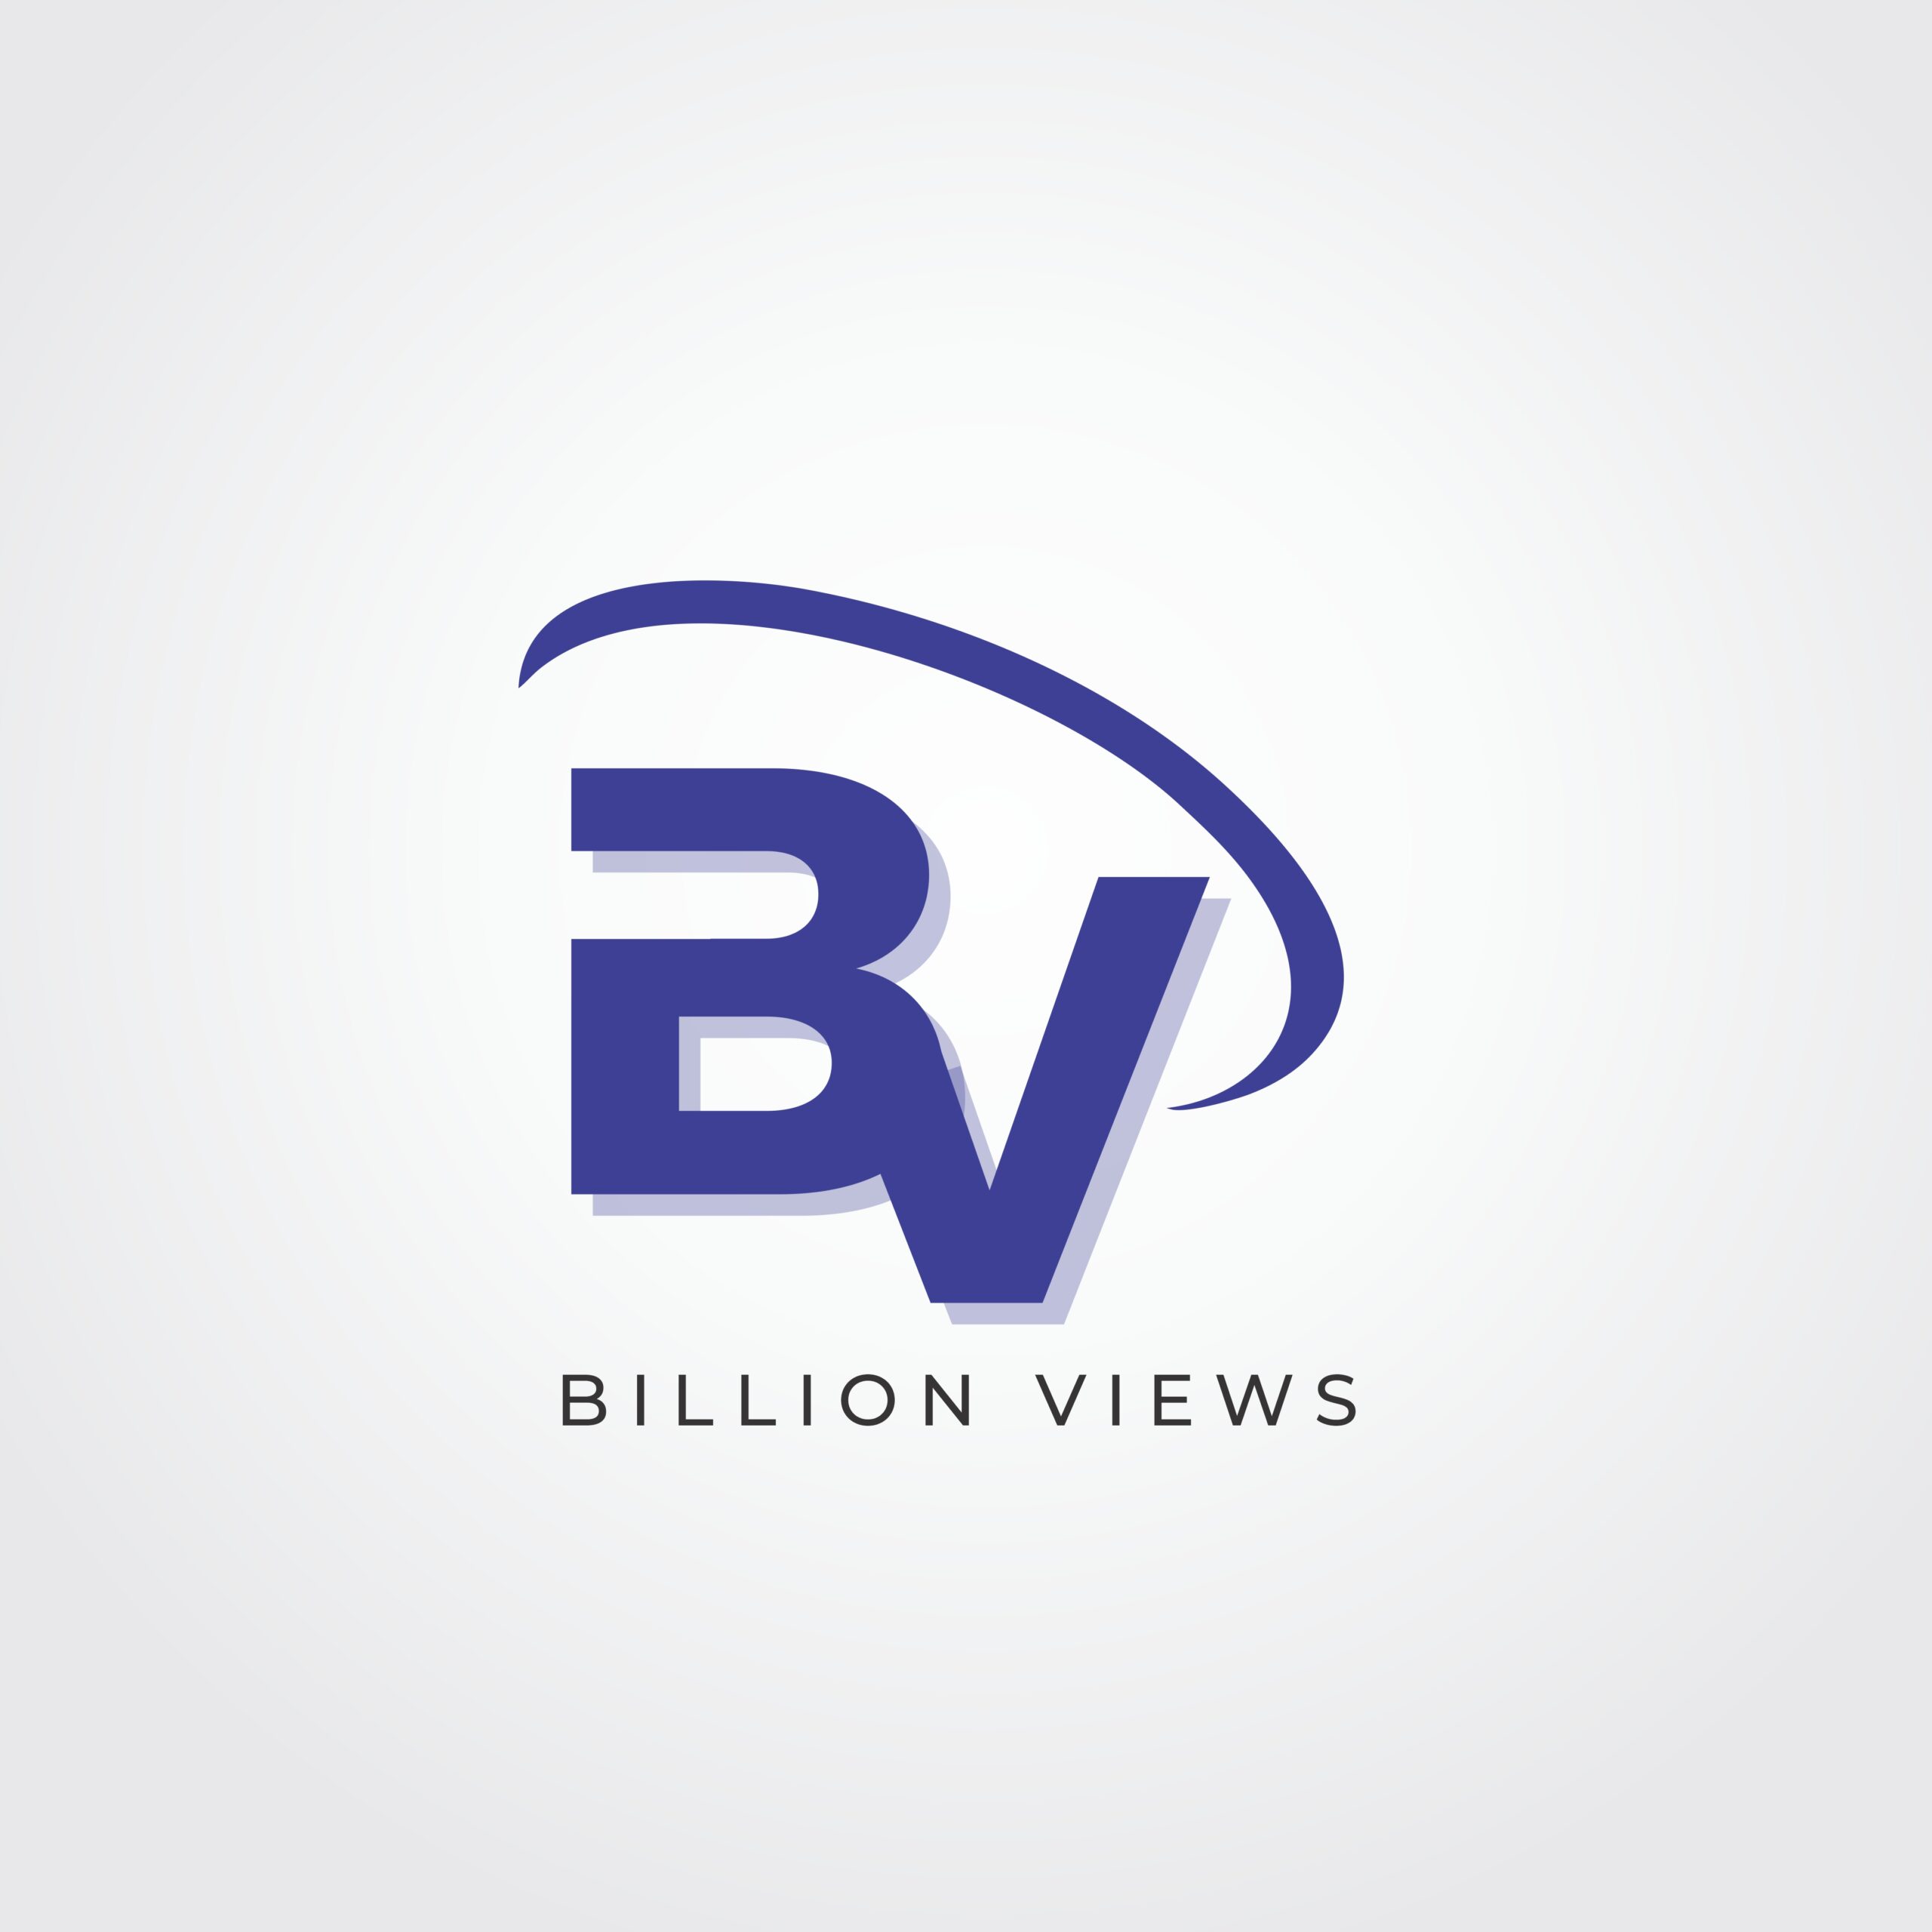 Billion views logo2 scaled